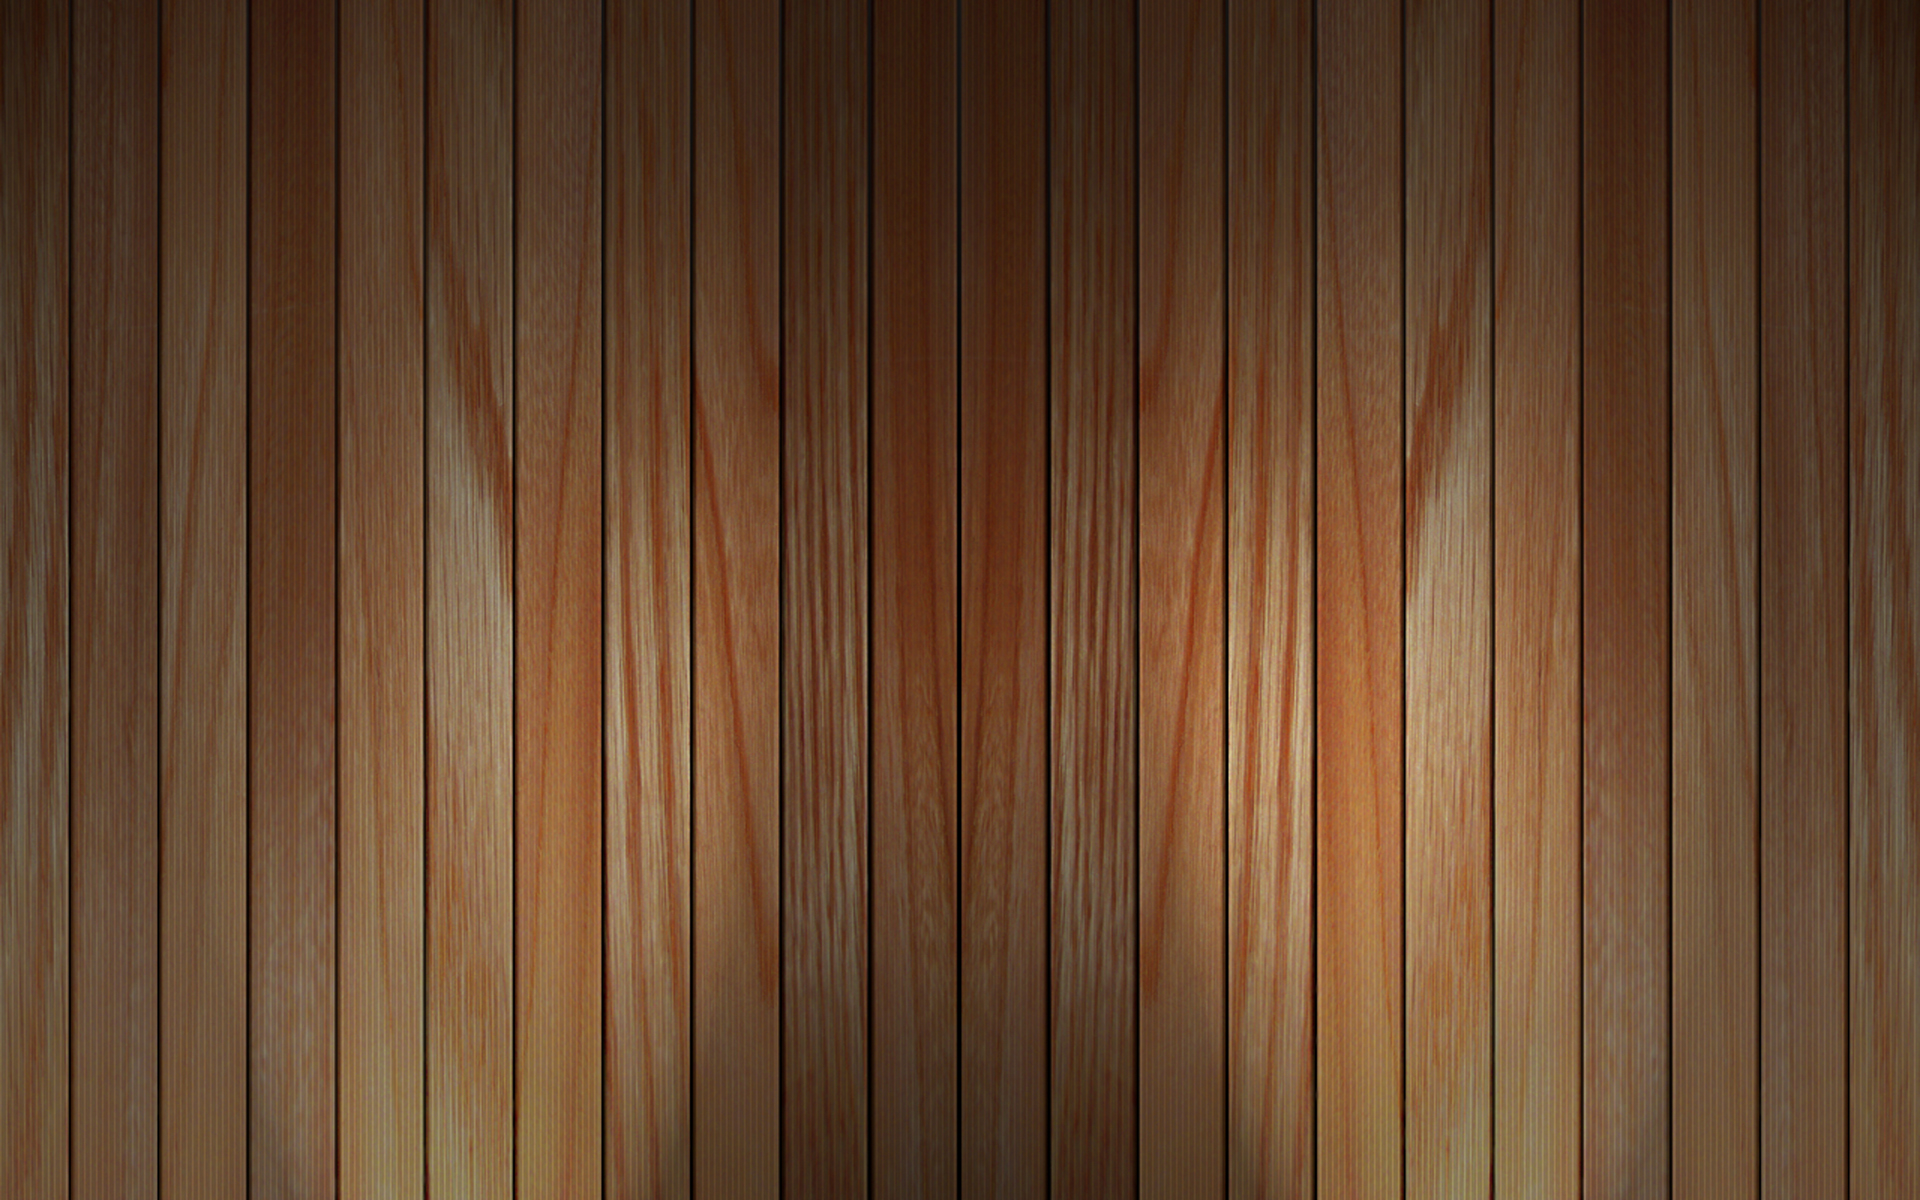 Wood Grain Backgrounds HD.